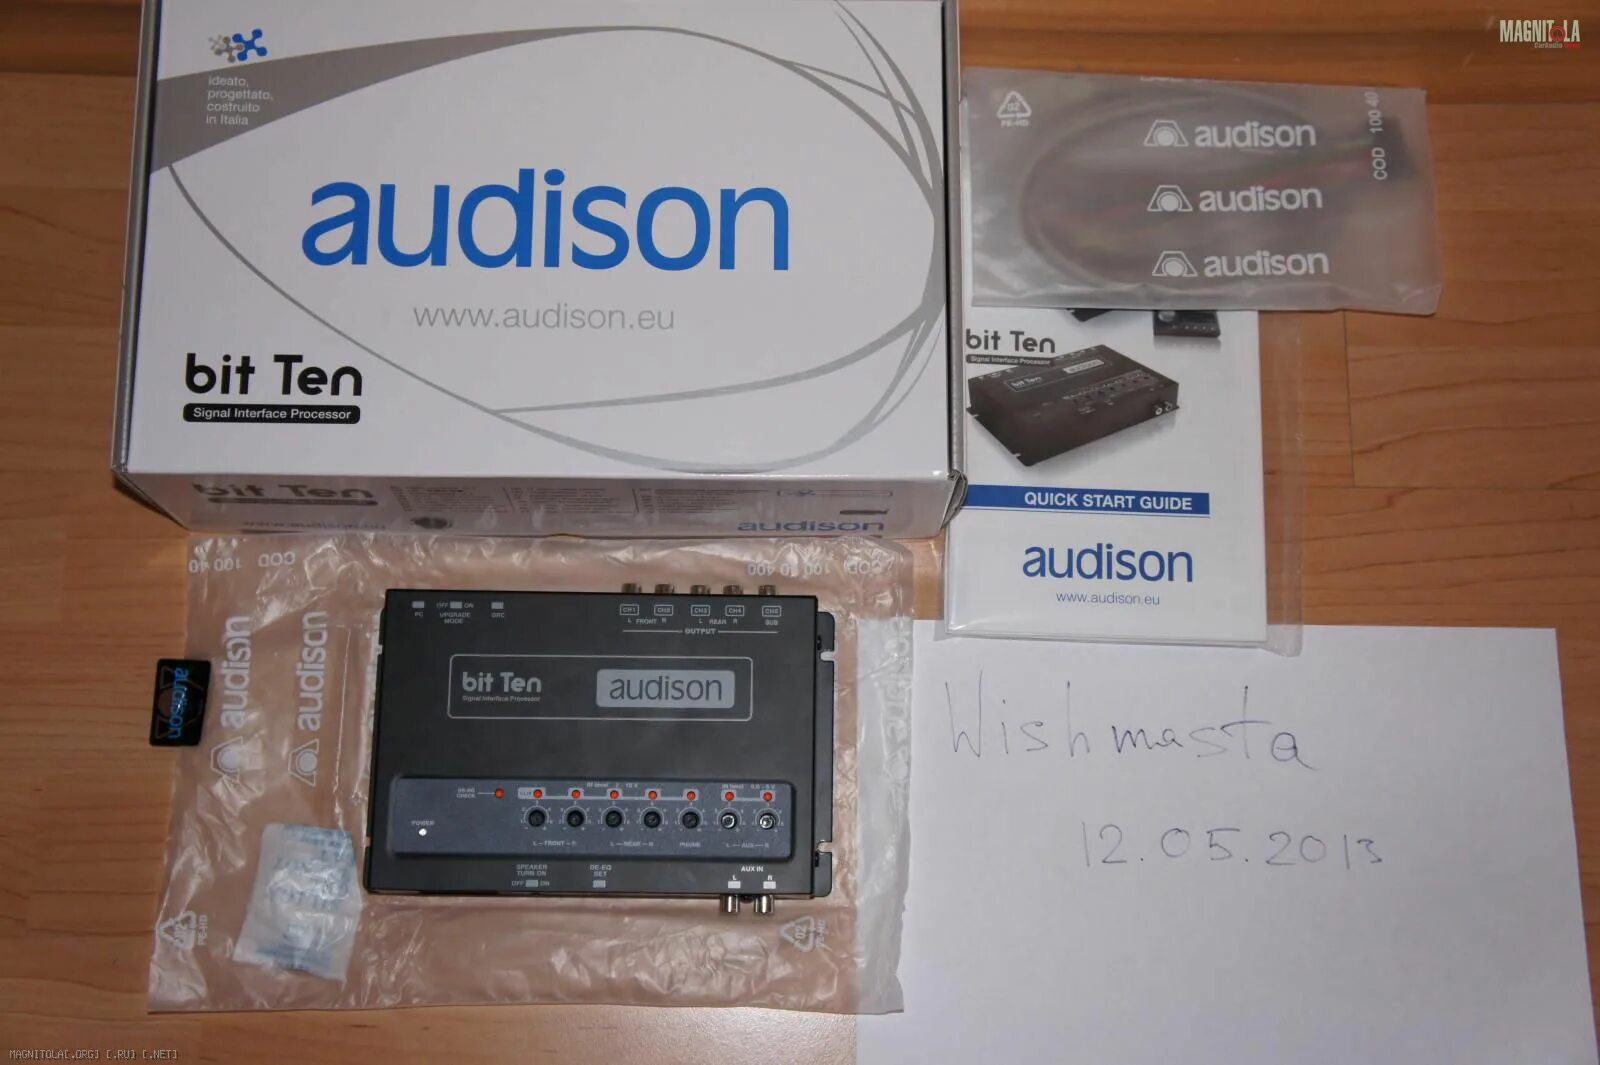 Audison bit ten. Аудио процессор для автомобиля Audison bit ten. Аудисон bit one комплектация. Audison bit ten инструкция. Audison bit ten d Туарег.